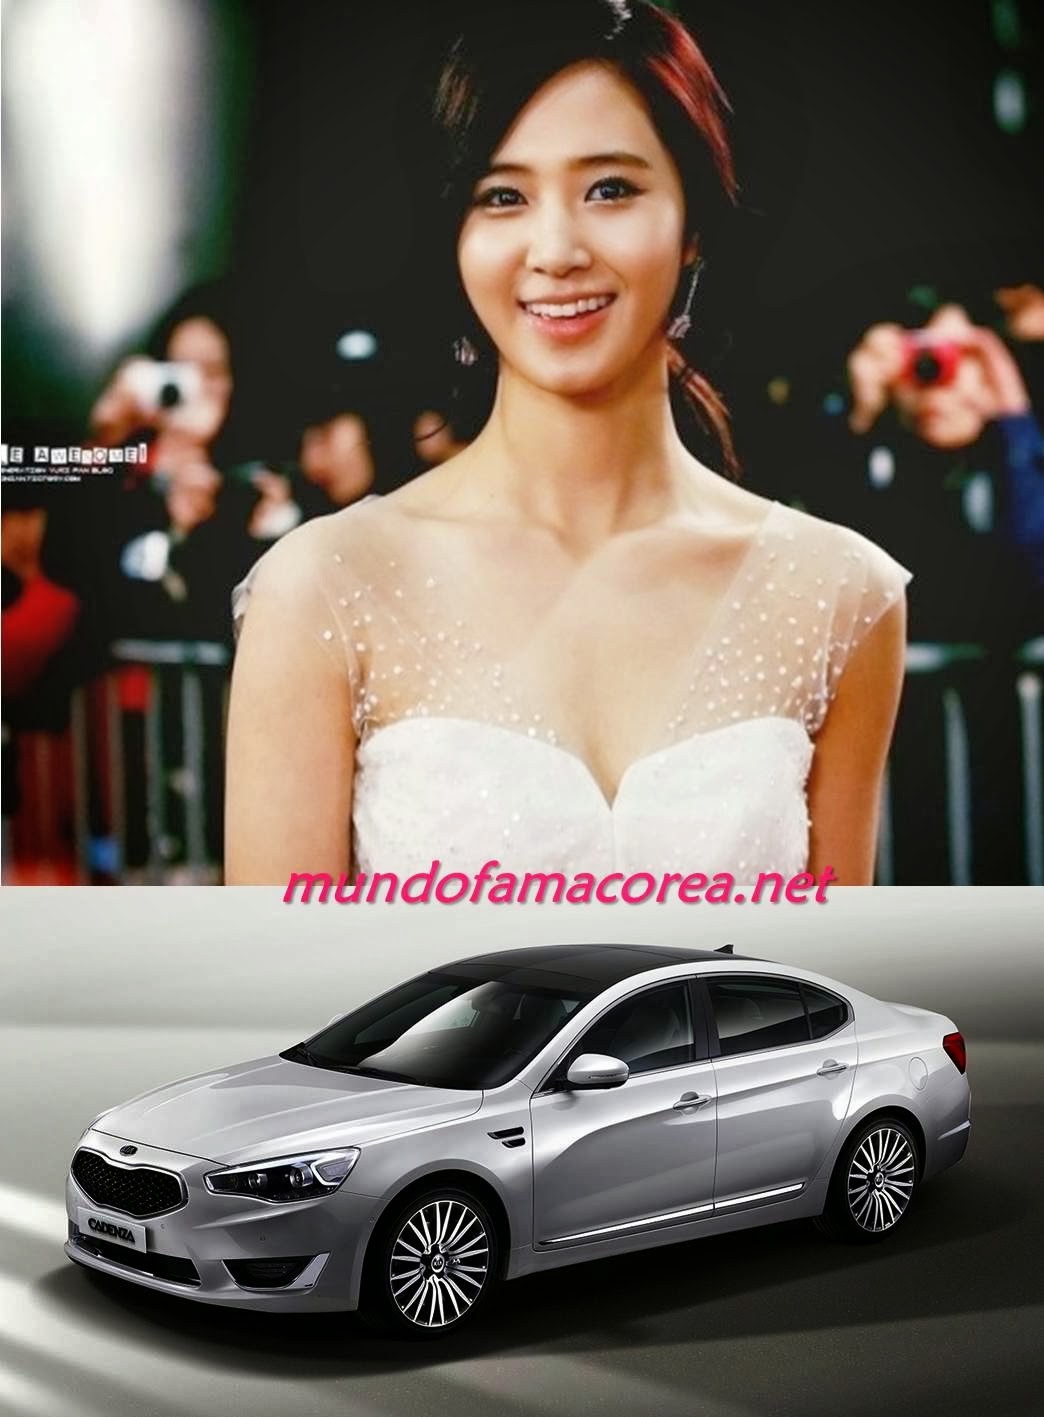 FEMALE KPOP IDOLS AND THEIR CARS KOREA WORLD